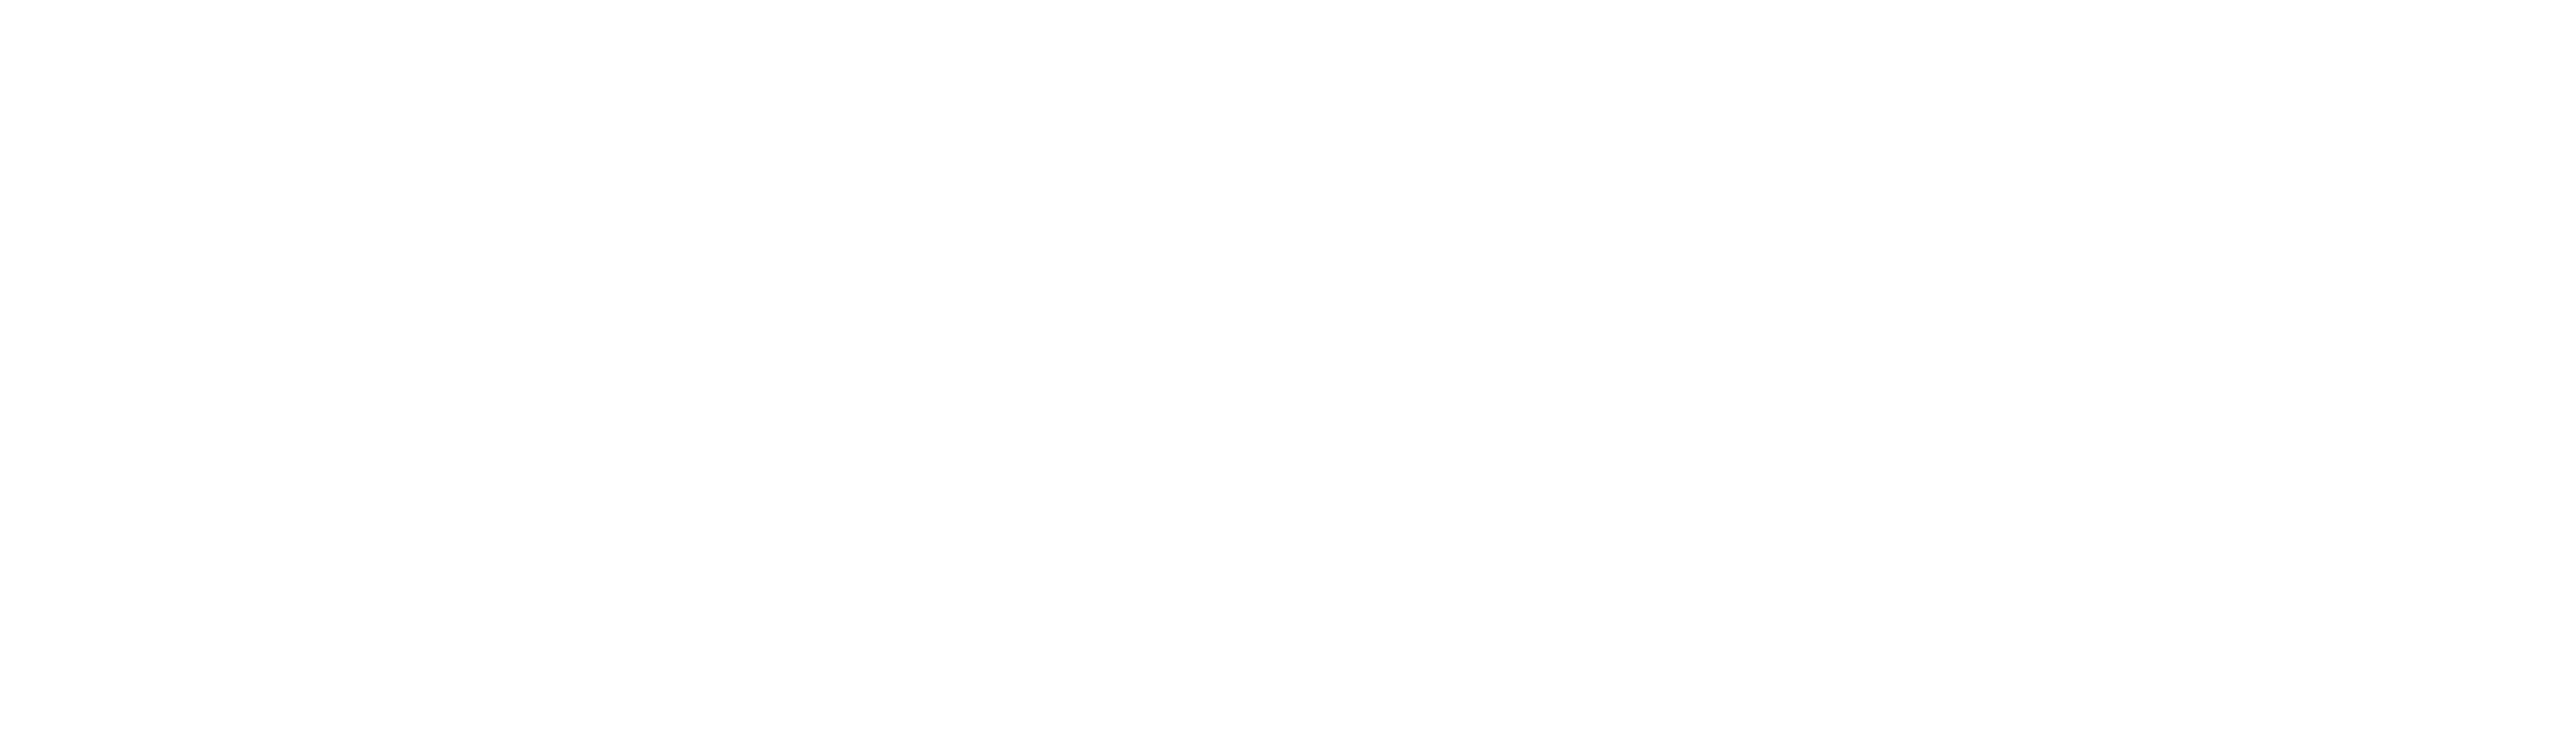 Women's Wear Daily logo.png